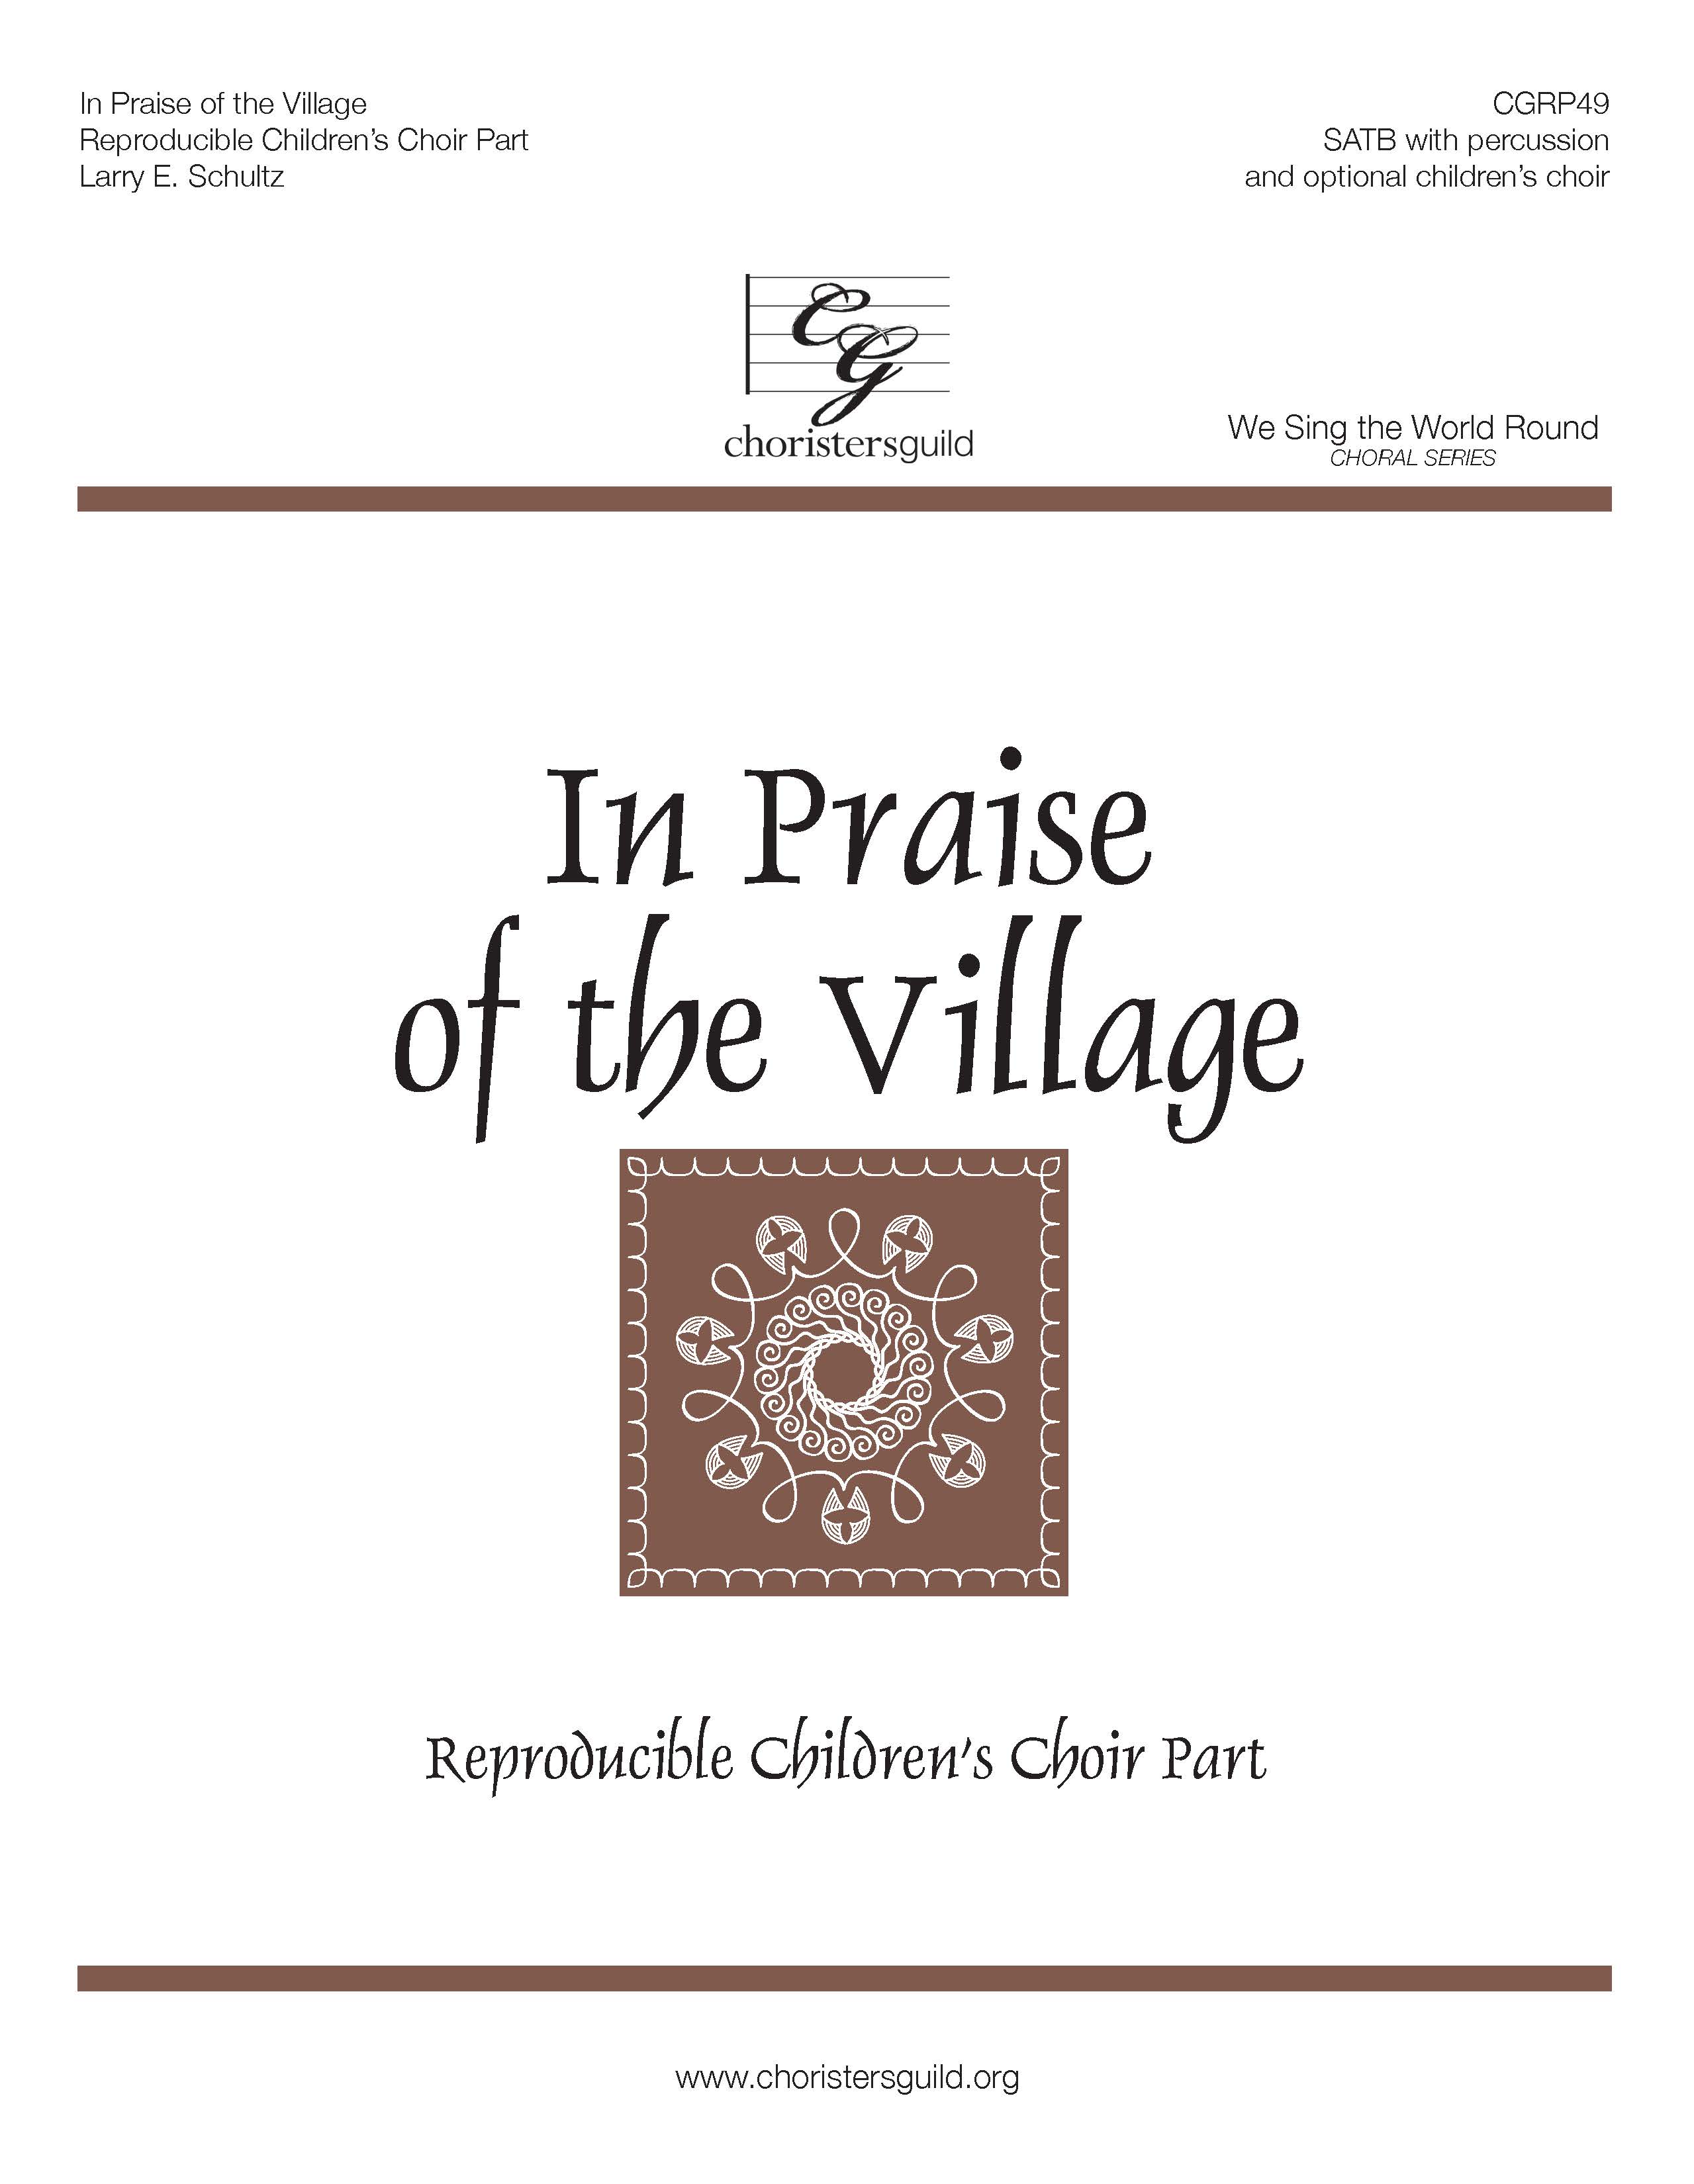 In Praise of the Village - Reproducible Children's Choir Part